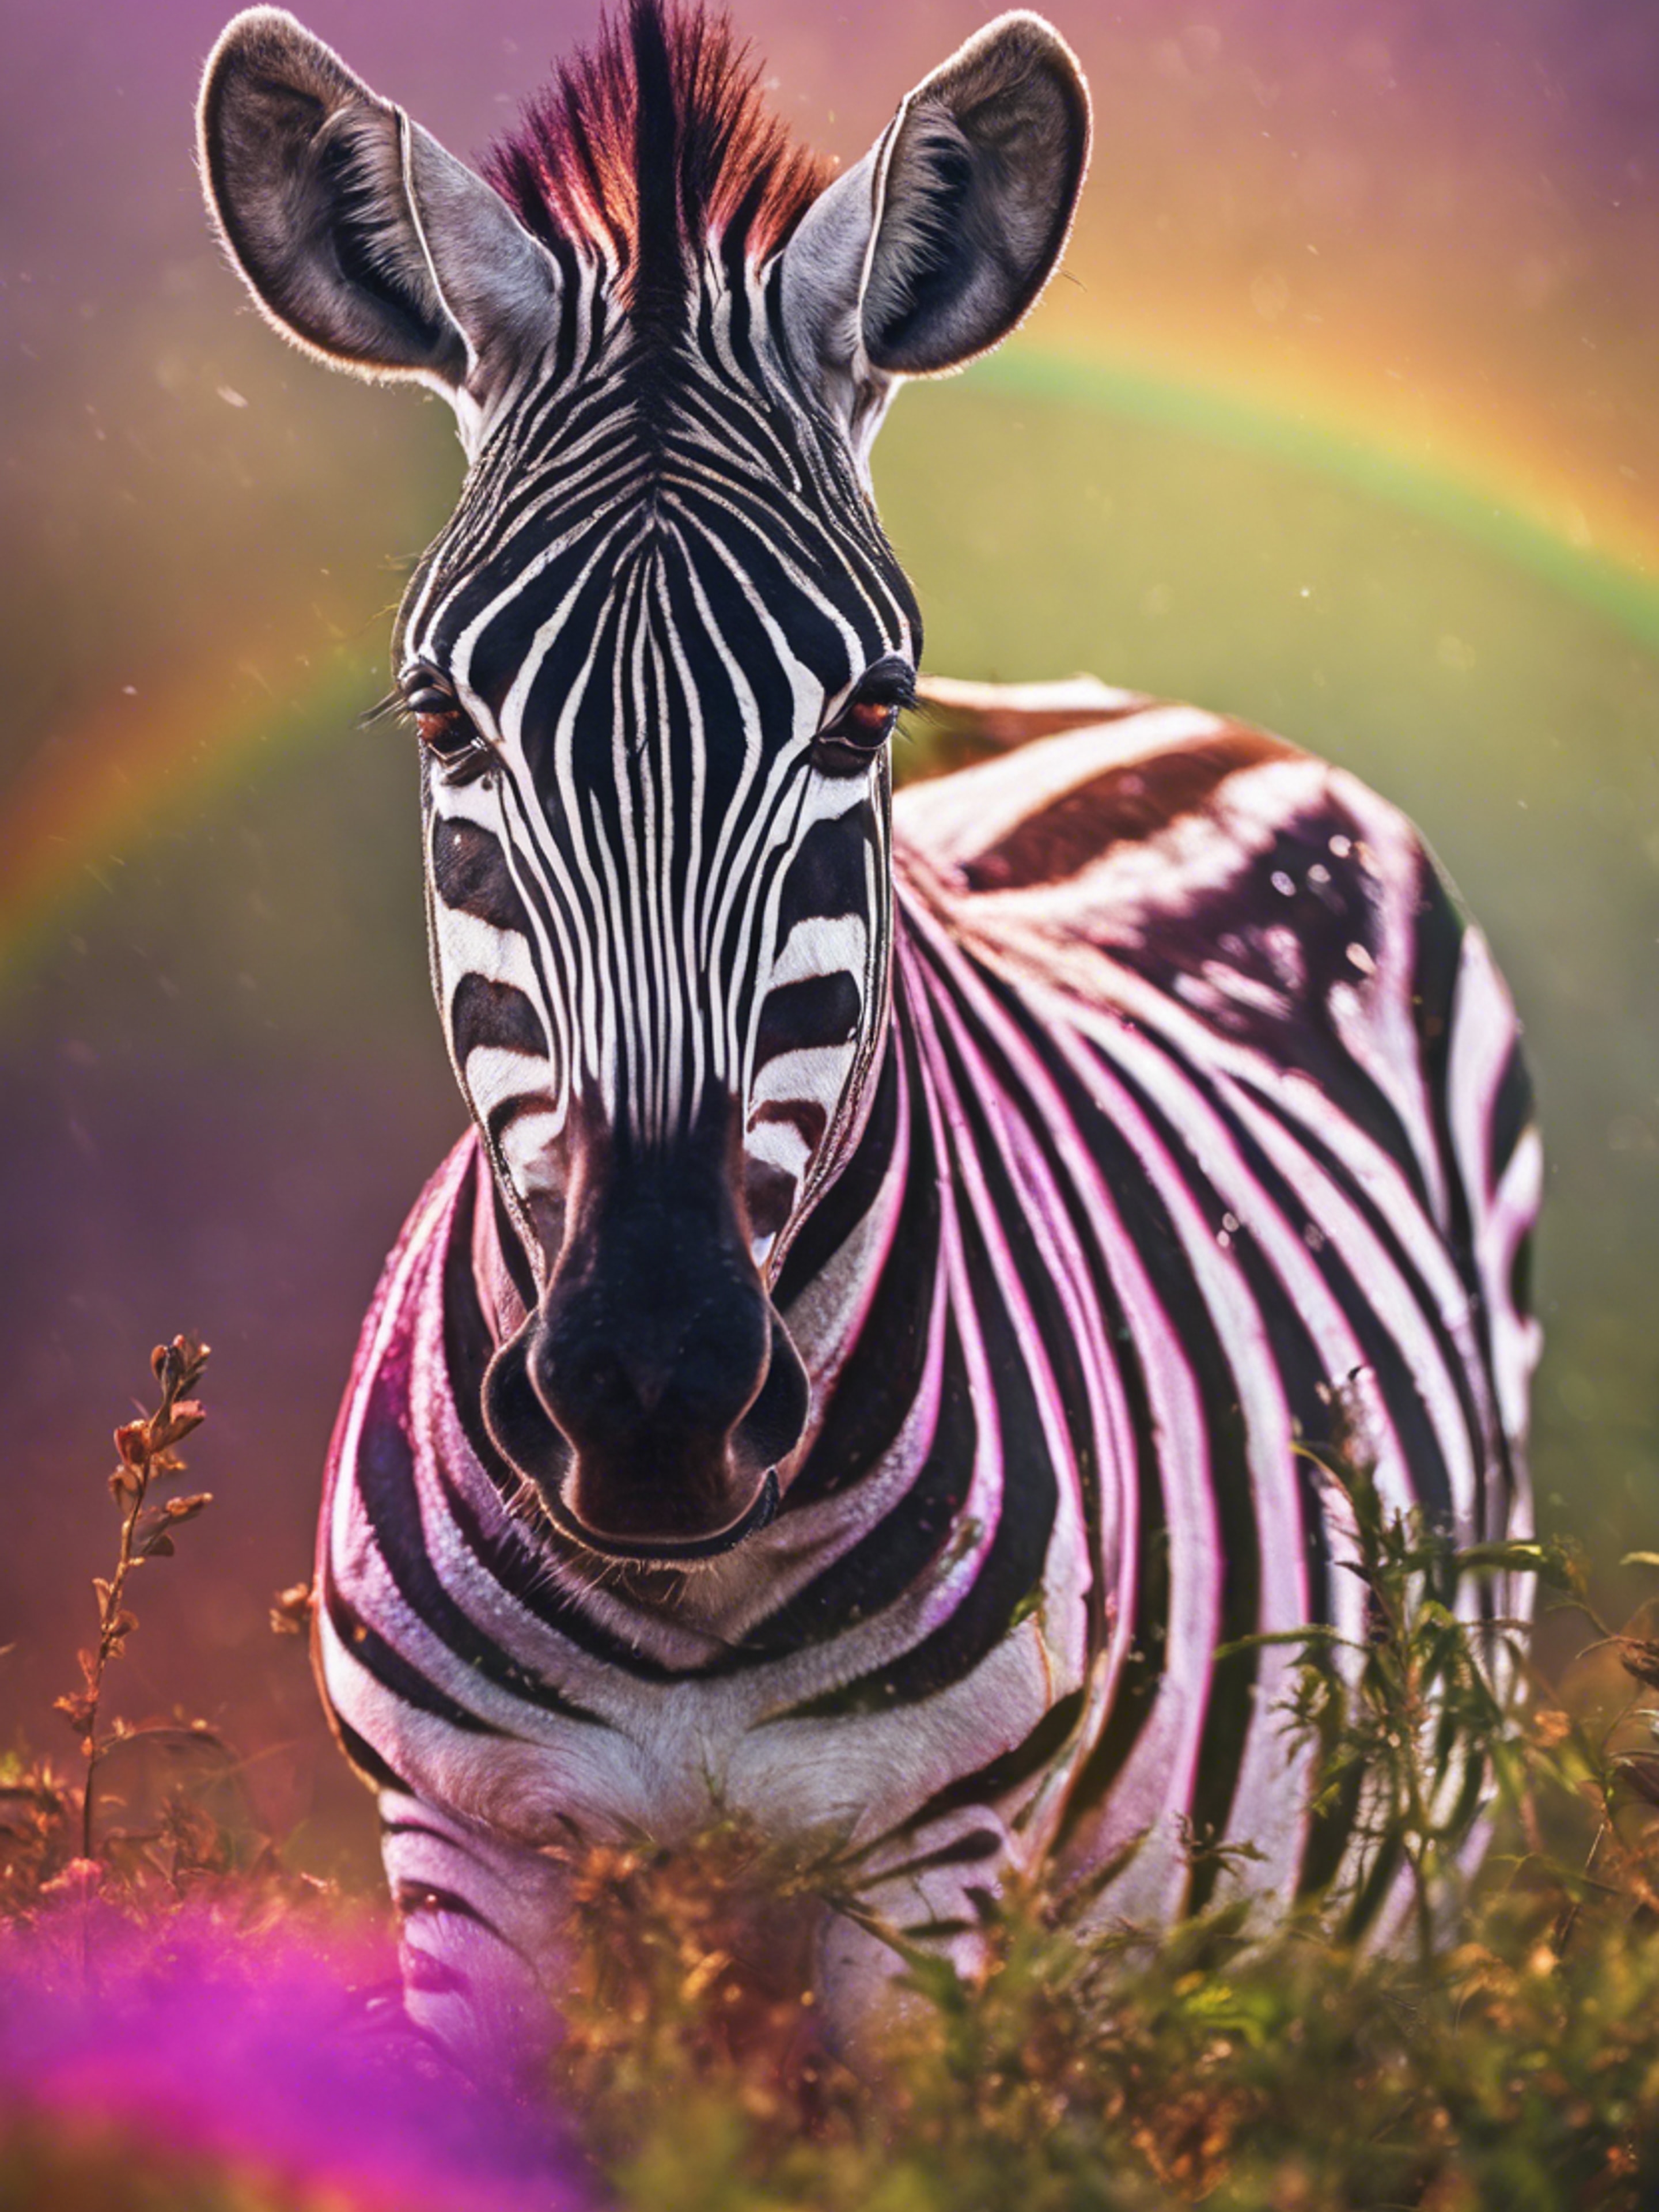 A zebra in the African wild under a vibrant rainbow after a short rain shower. Tapeta[a984eacdffd5482bb541]